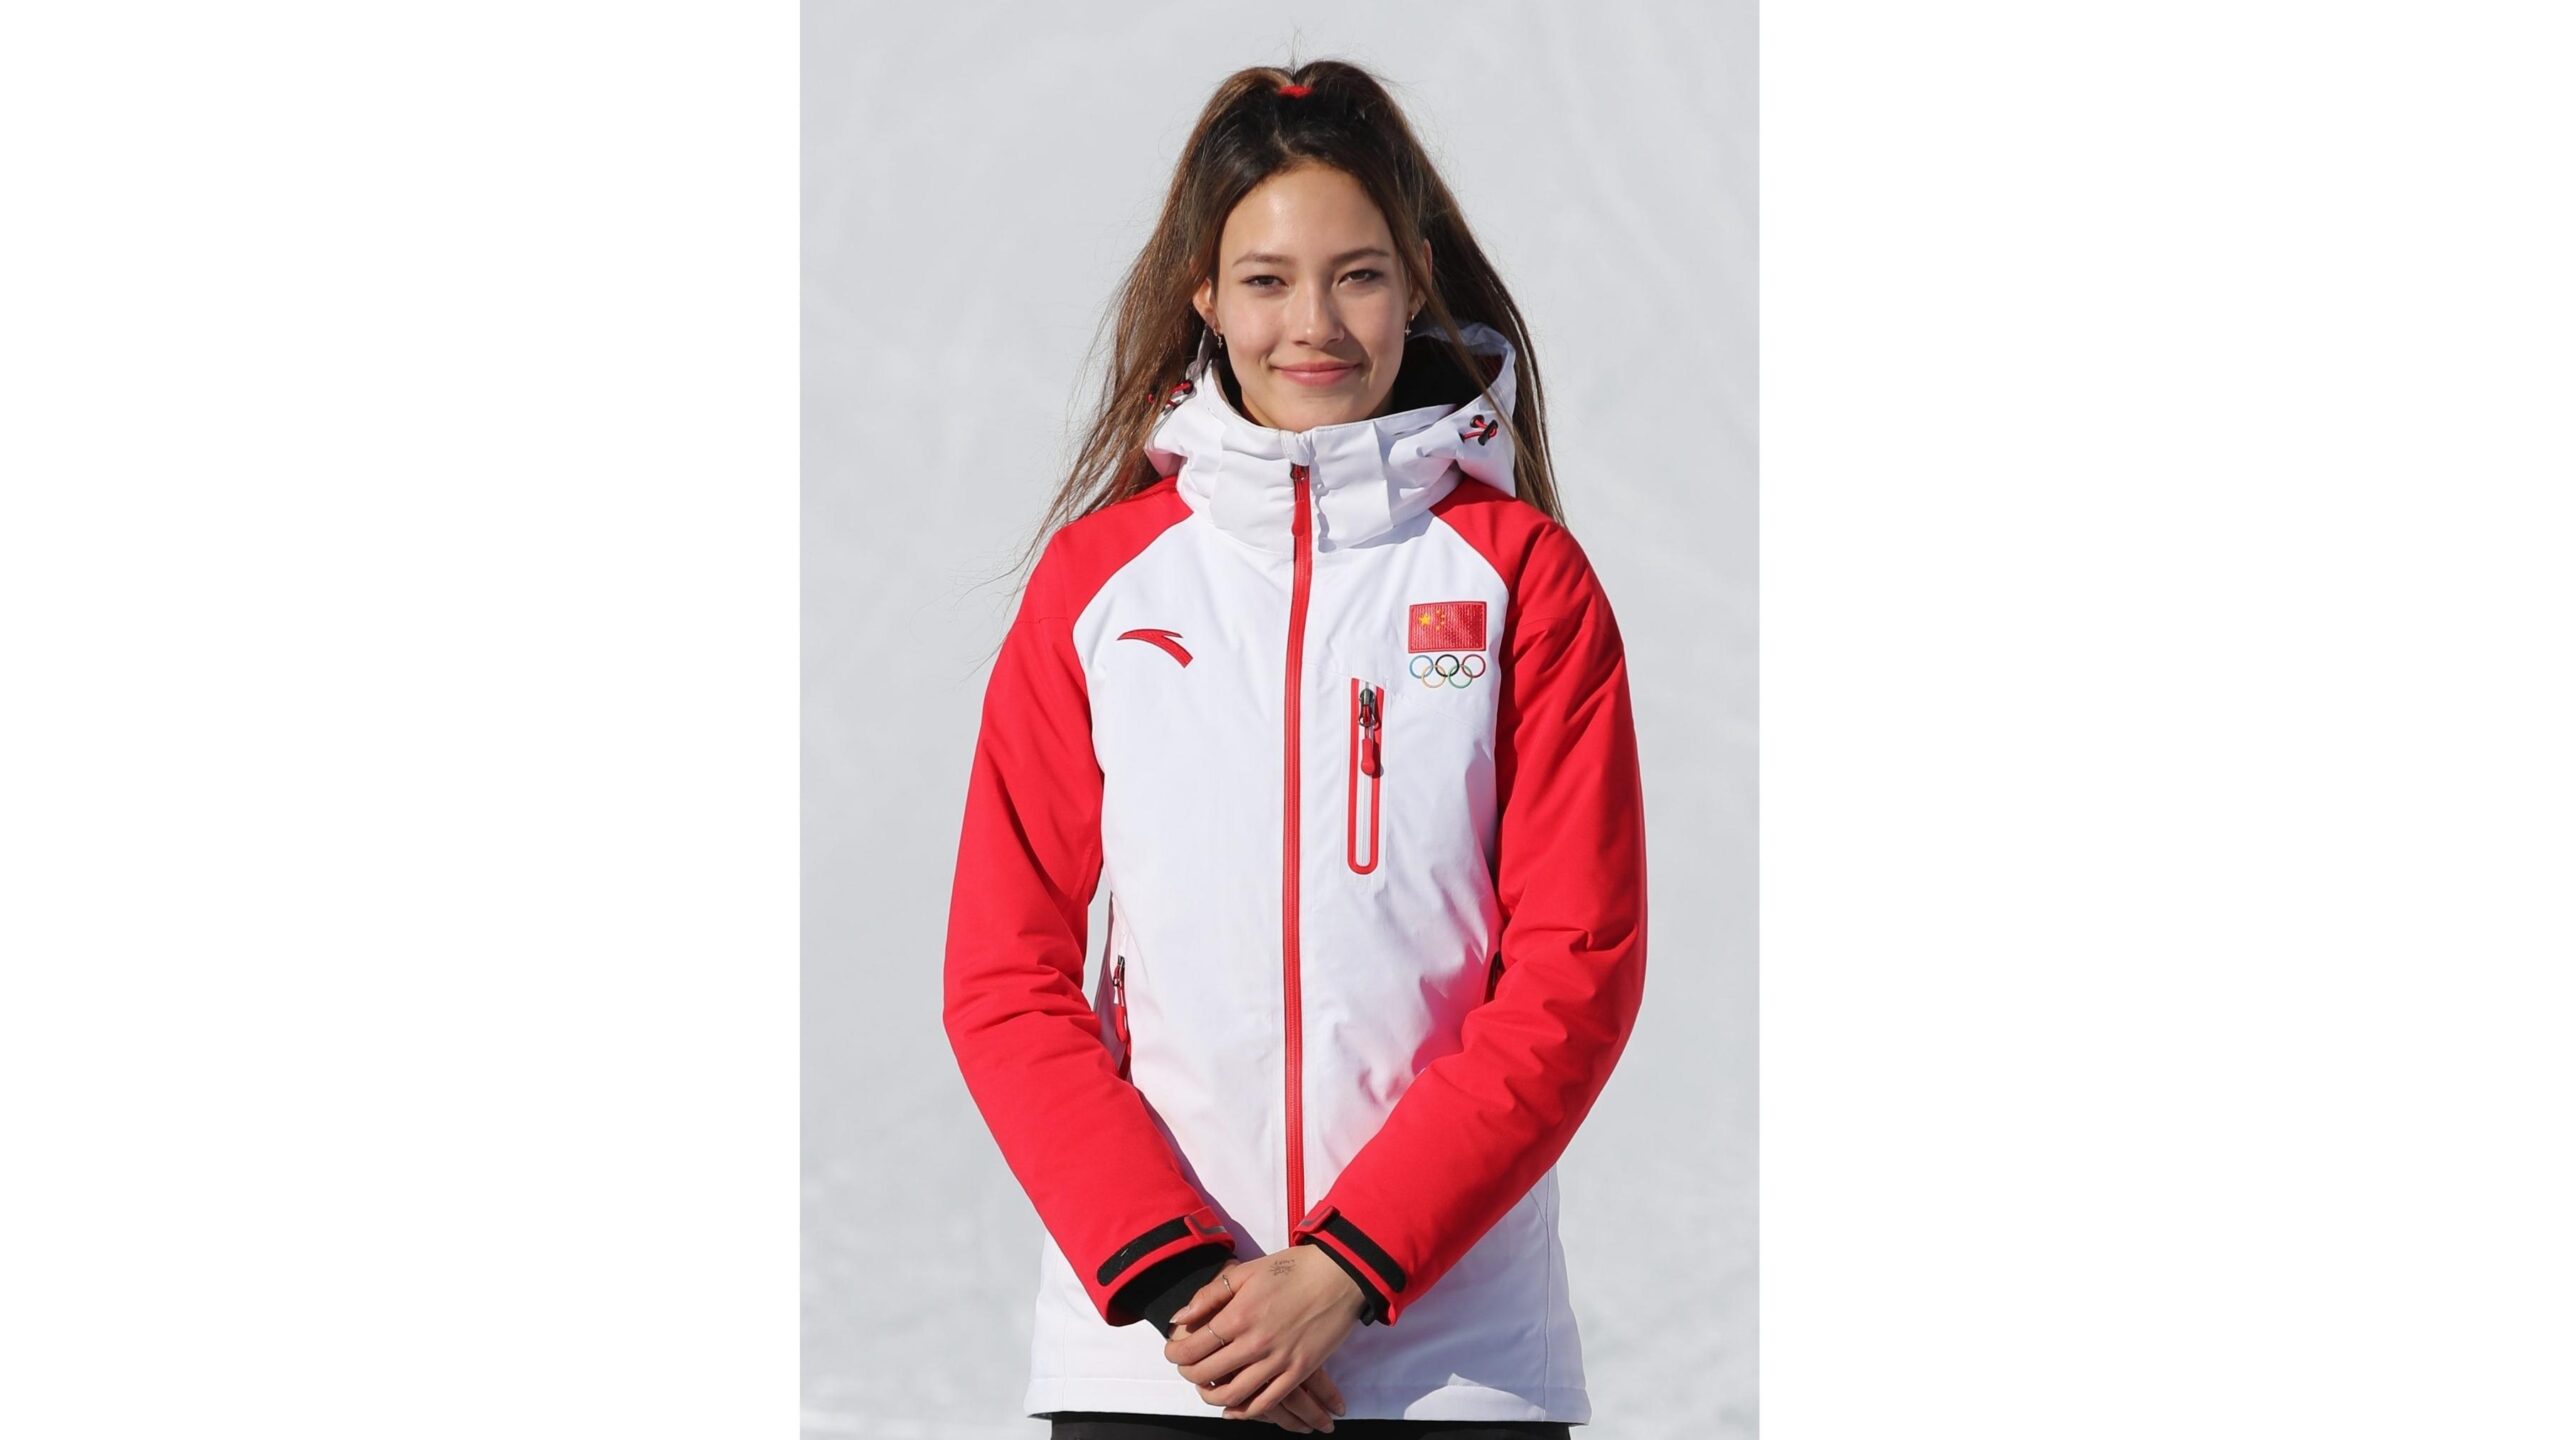 Skier Eileen Gu sparks uproar in China over U.S. 2030 Olympic bid